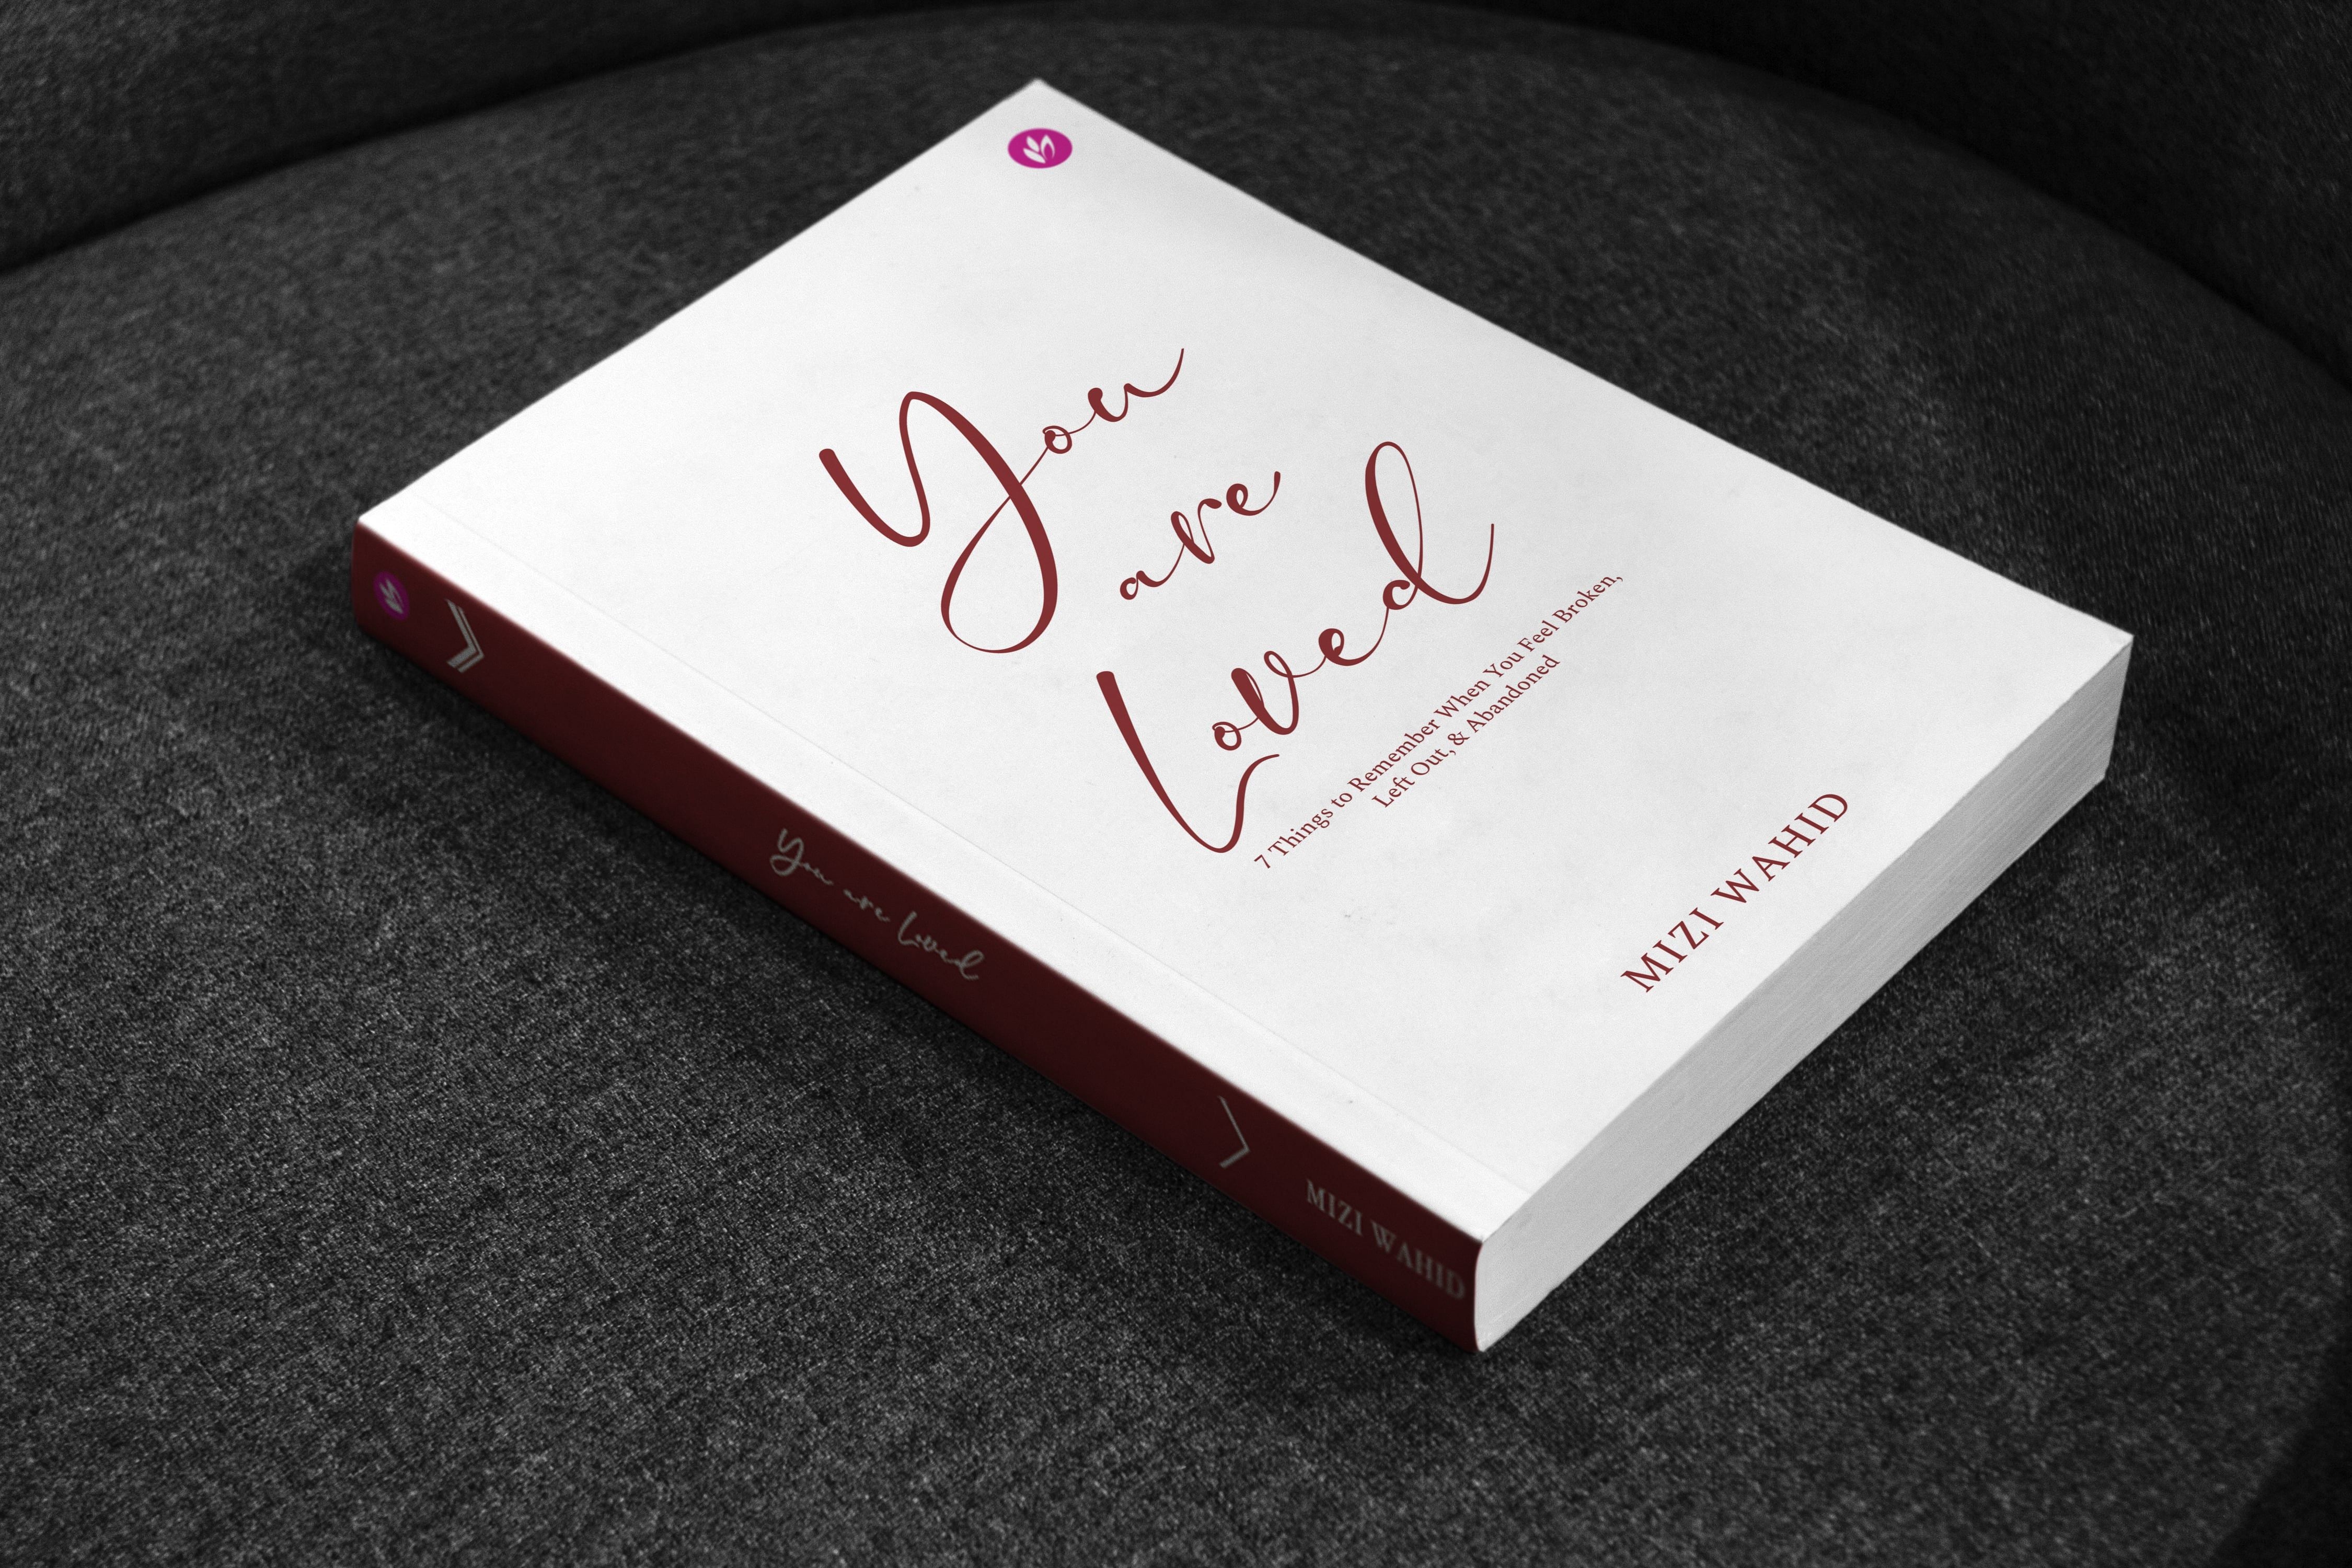 Iman Publication Buku You Are Loved by Mizi Wahid 100219